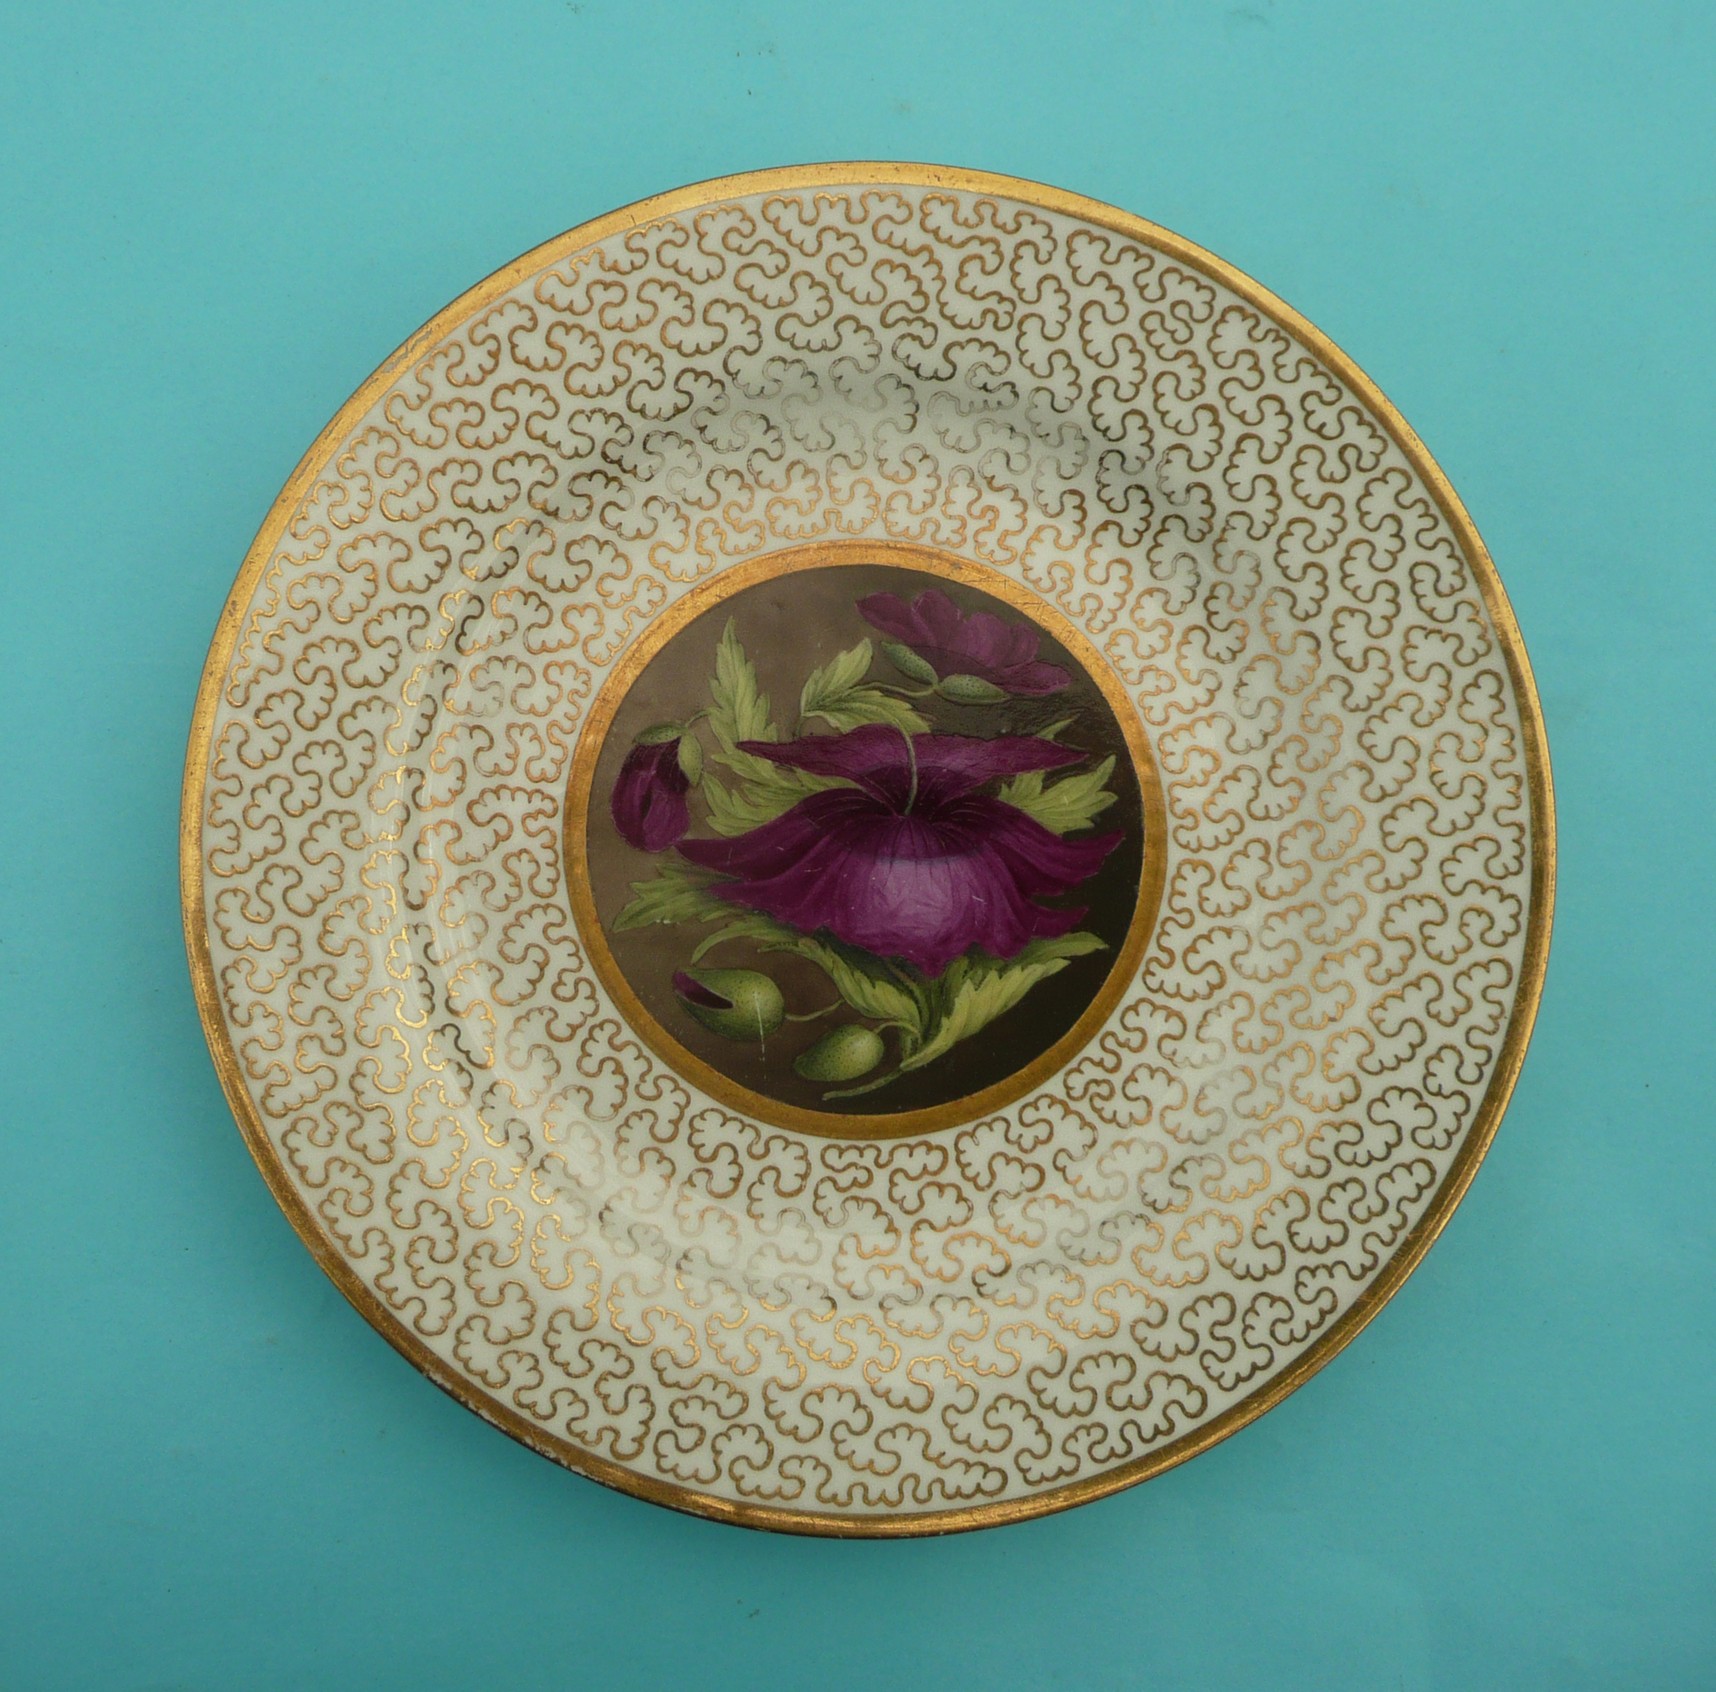 The highly important Barr, Flight & Barr Worcester floral specimen dessert service by William - Image 24 of 34